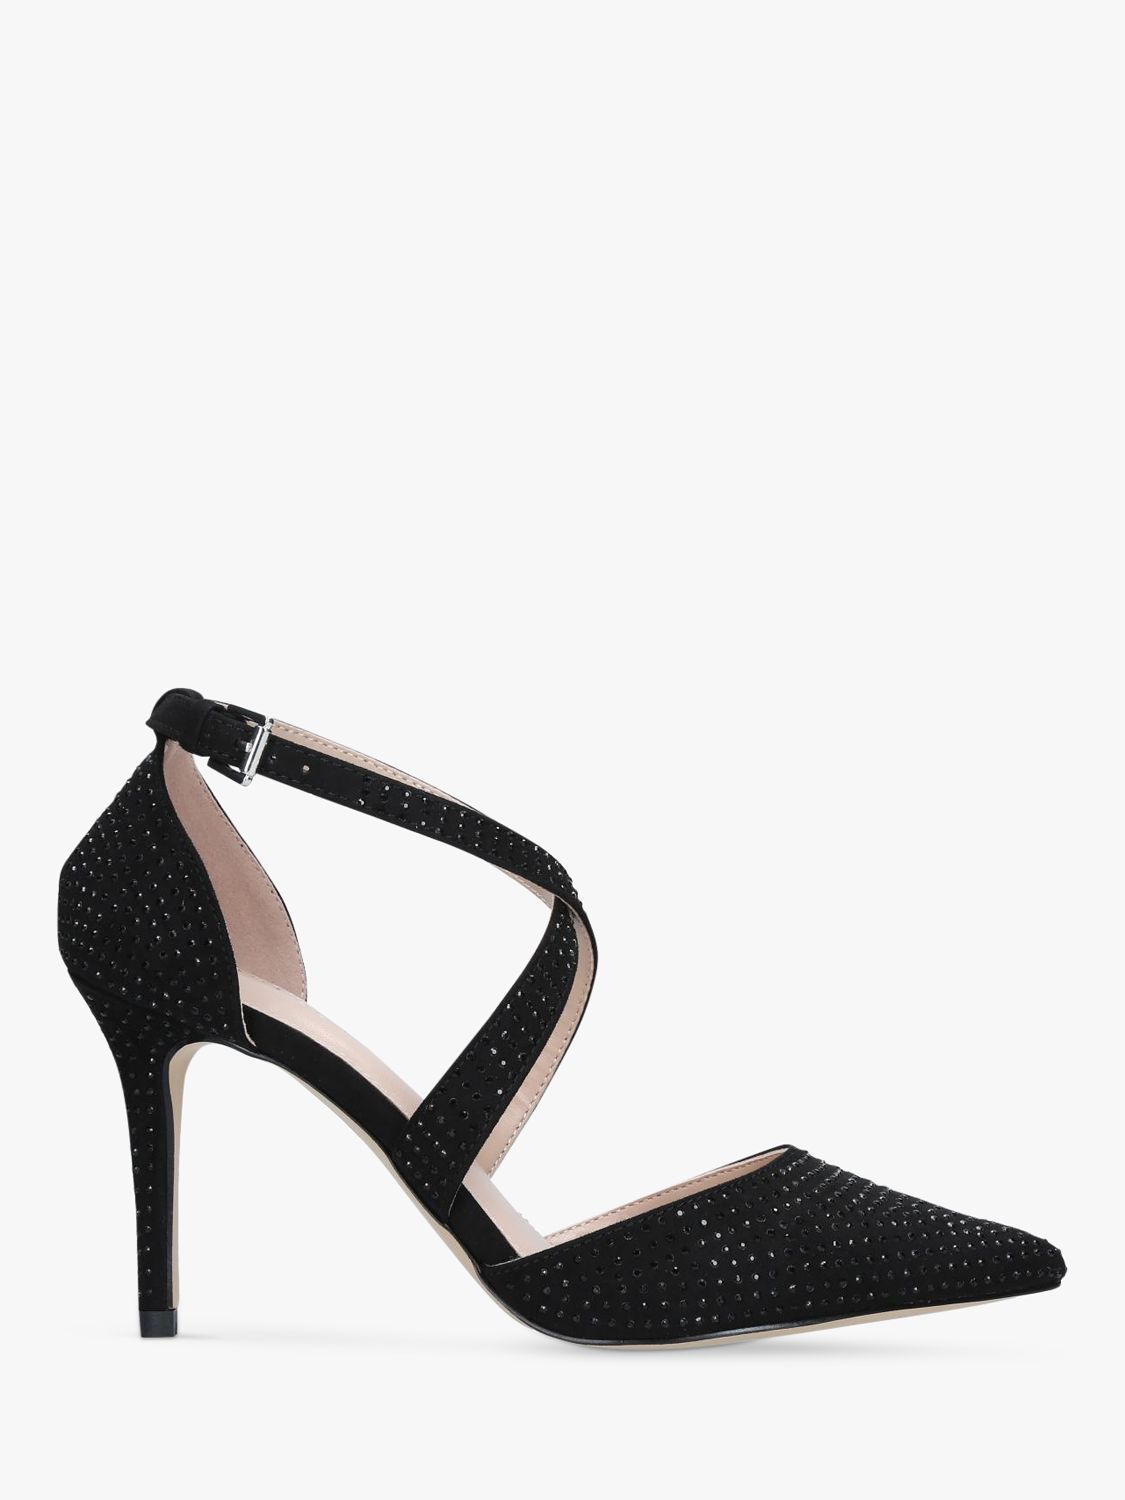 Carvela Kross Jewel Suede Court Shoes, Black at John Lewis & Partners